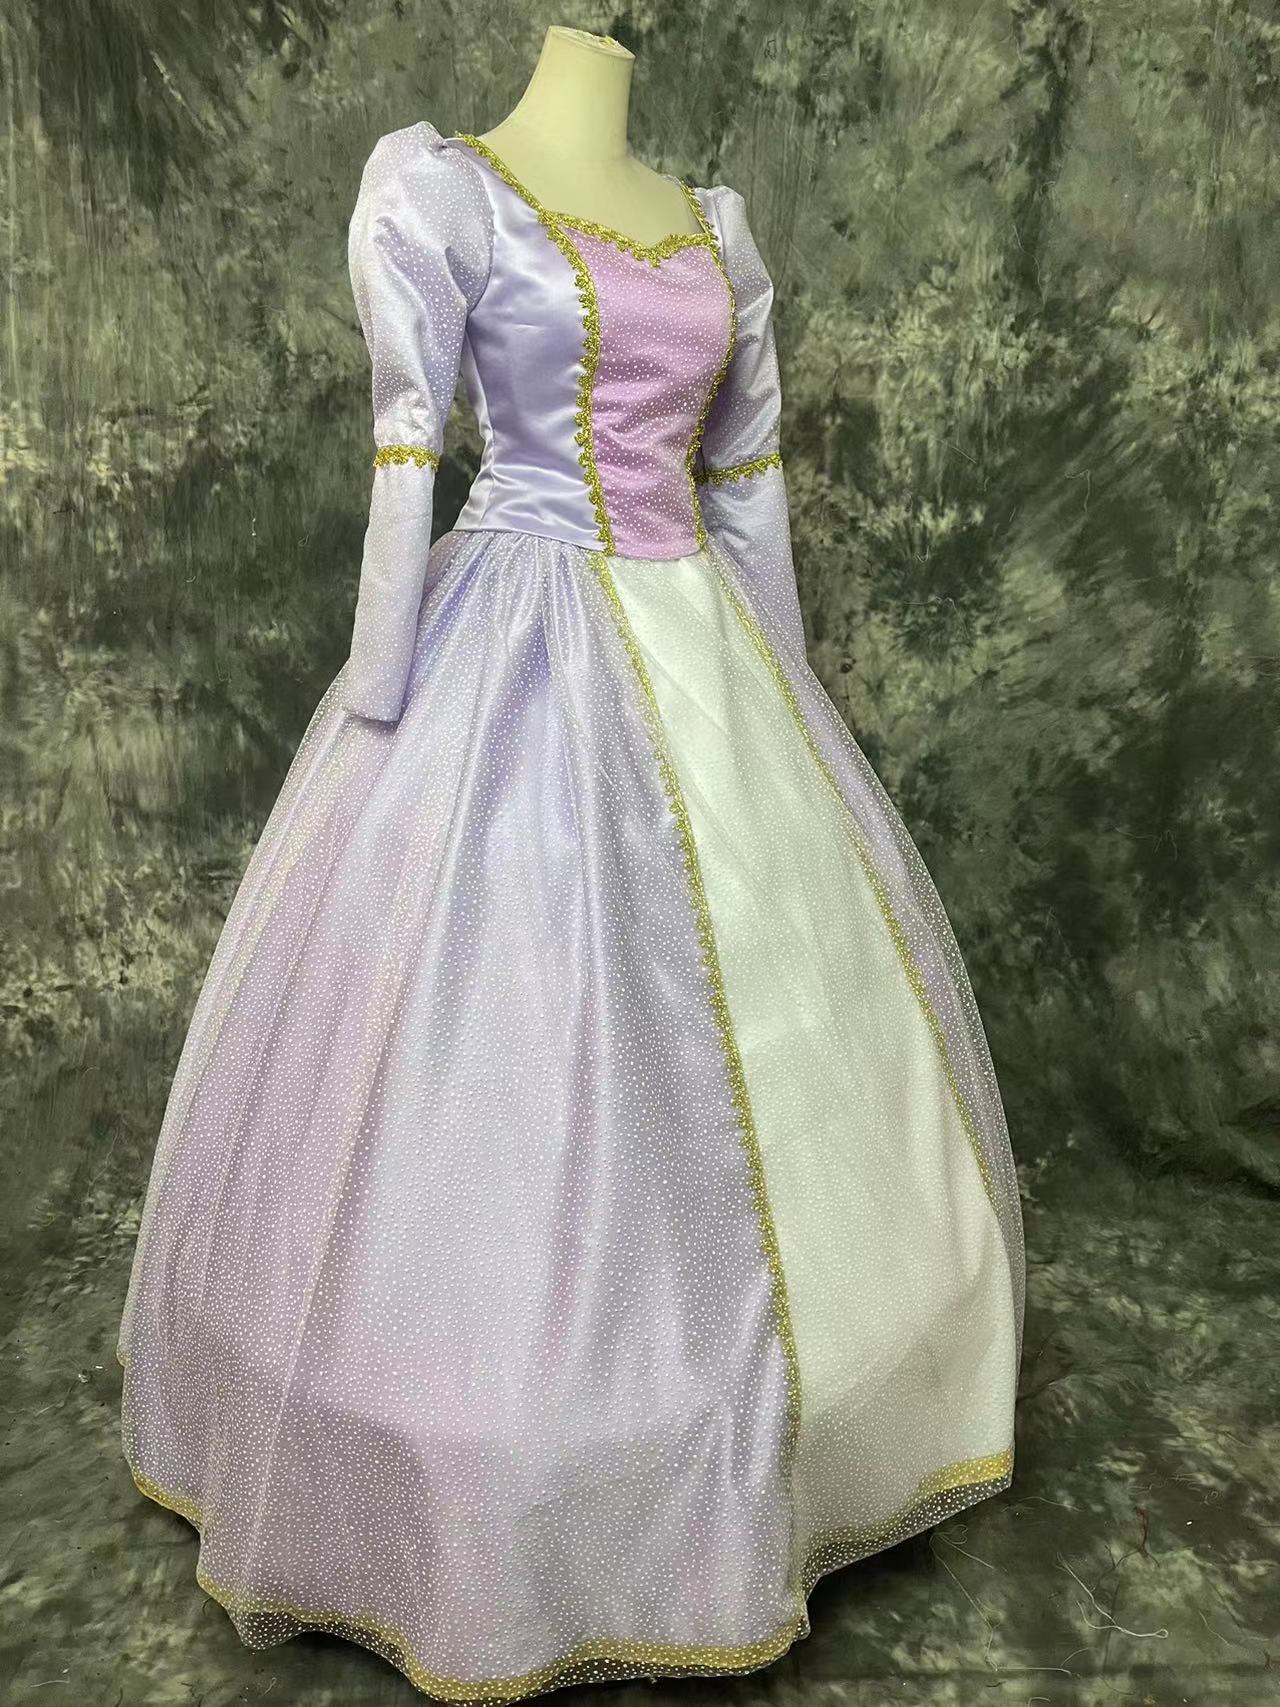 Barbie Purple Princess Dress Cosplay Costume